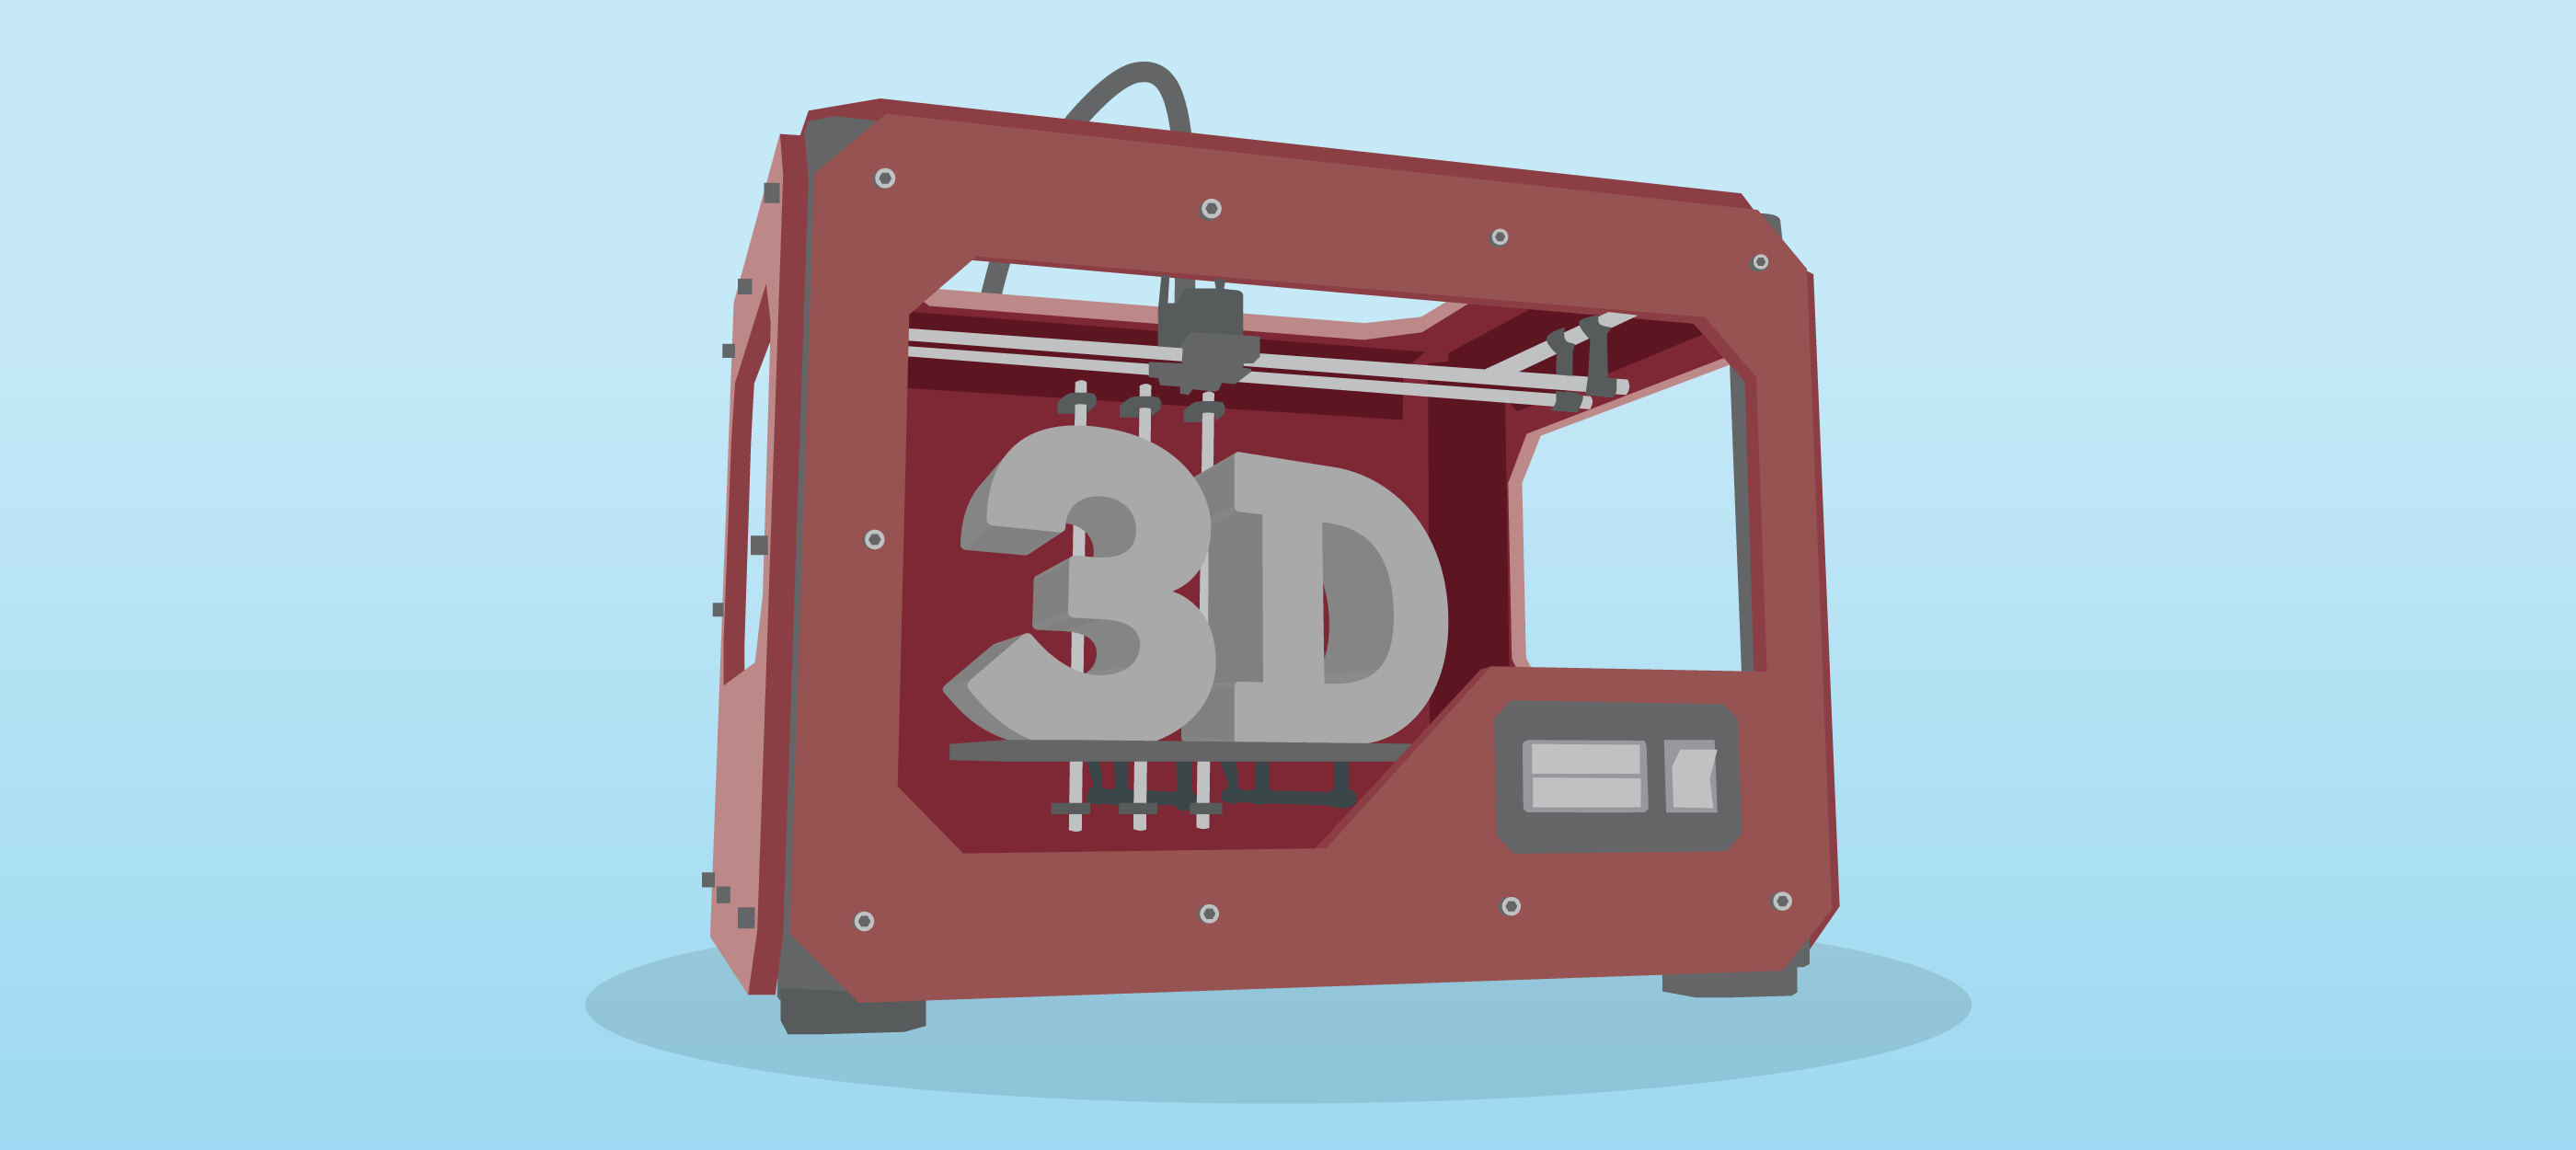 A 3D printer printing a 3D object